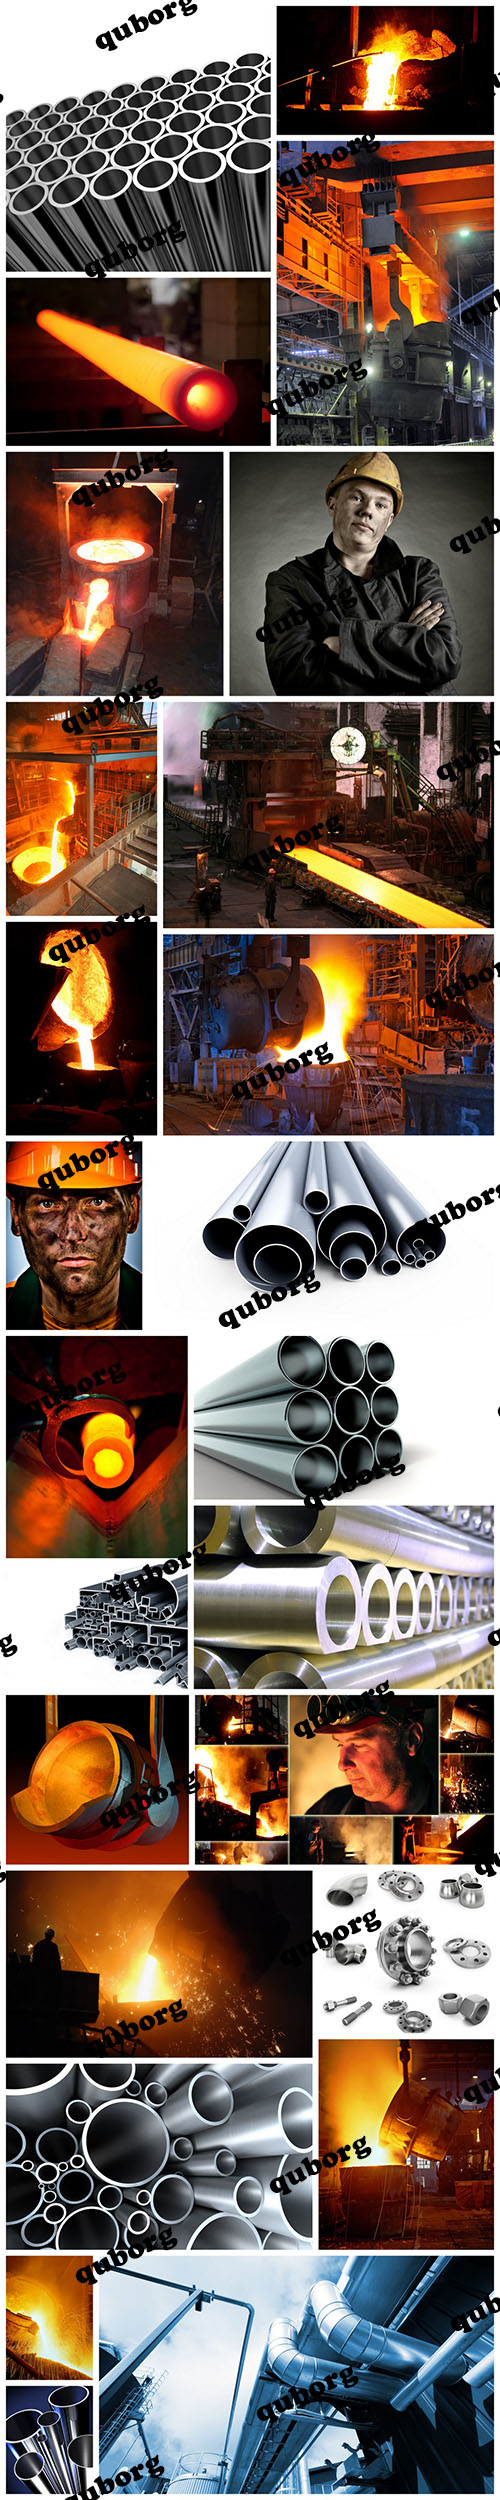 Stock Photos - Metallurgical Industry